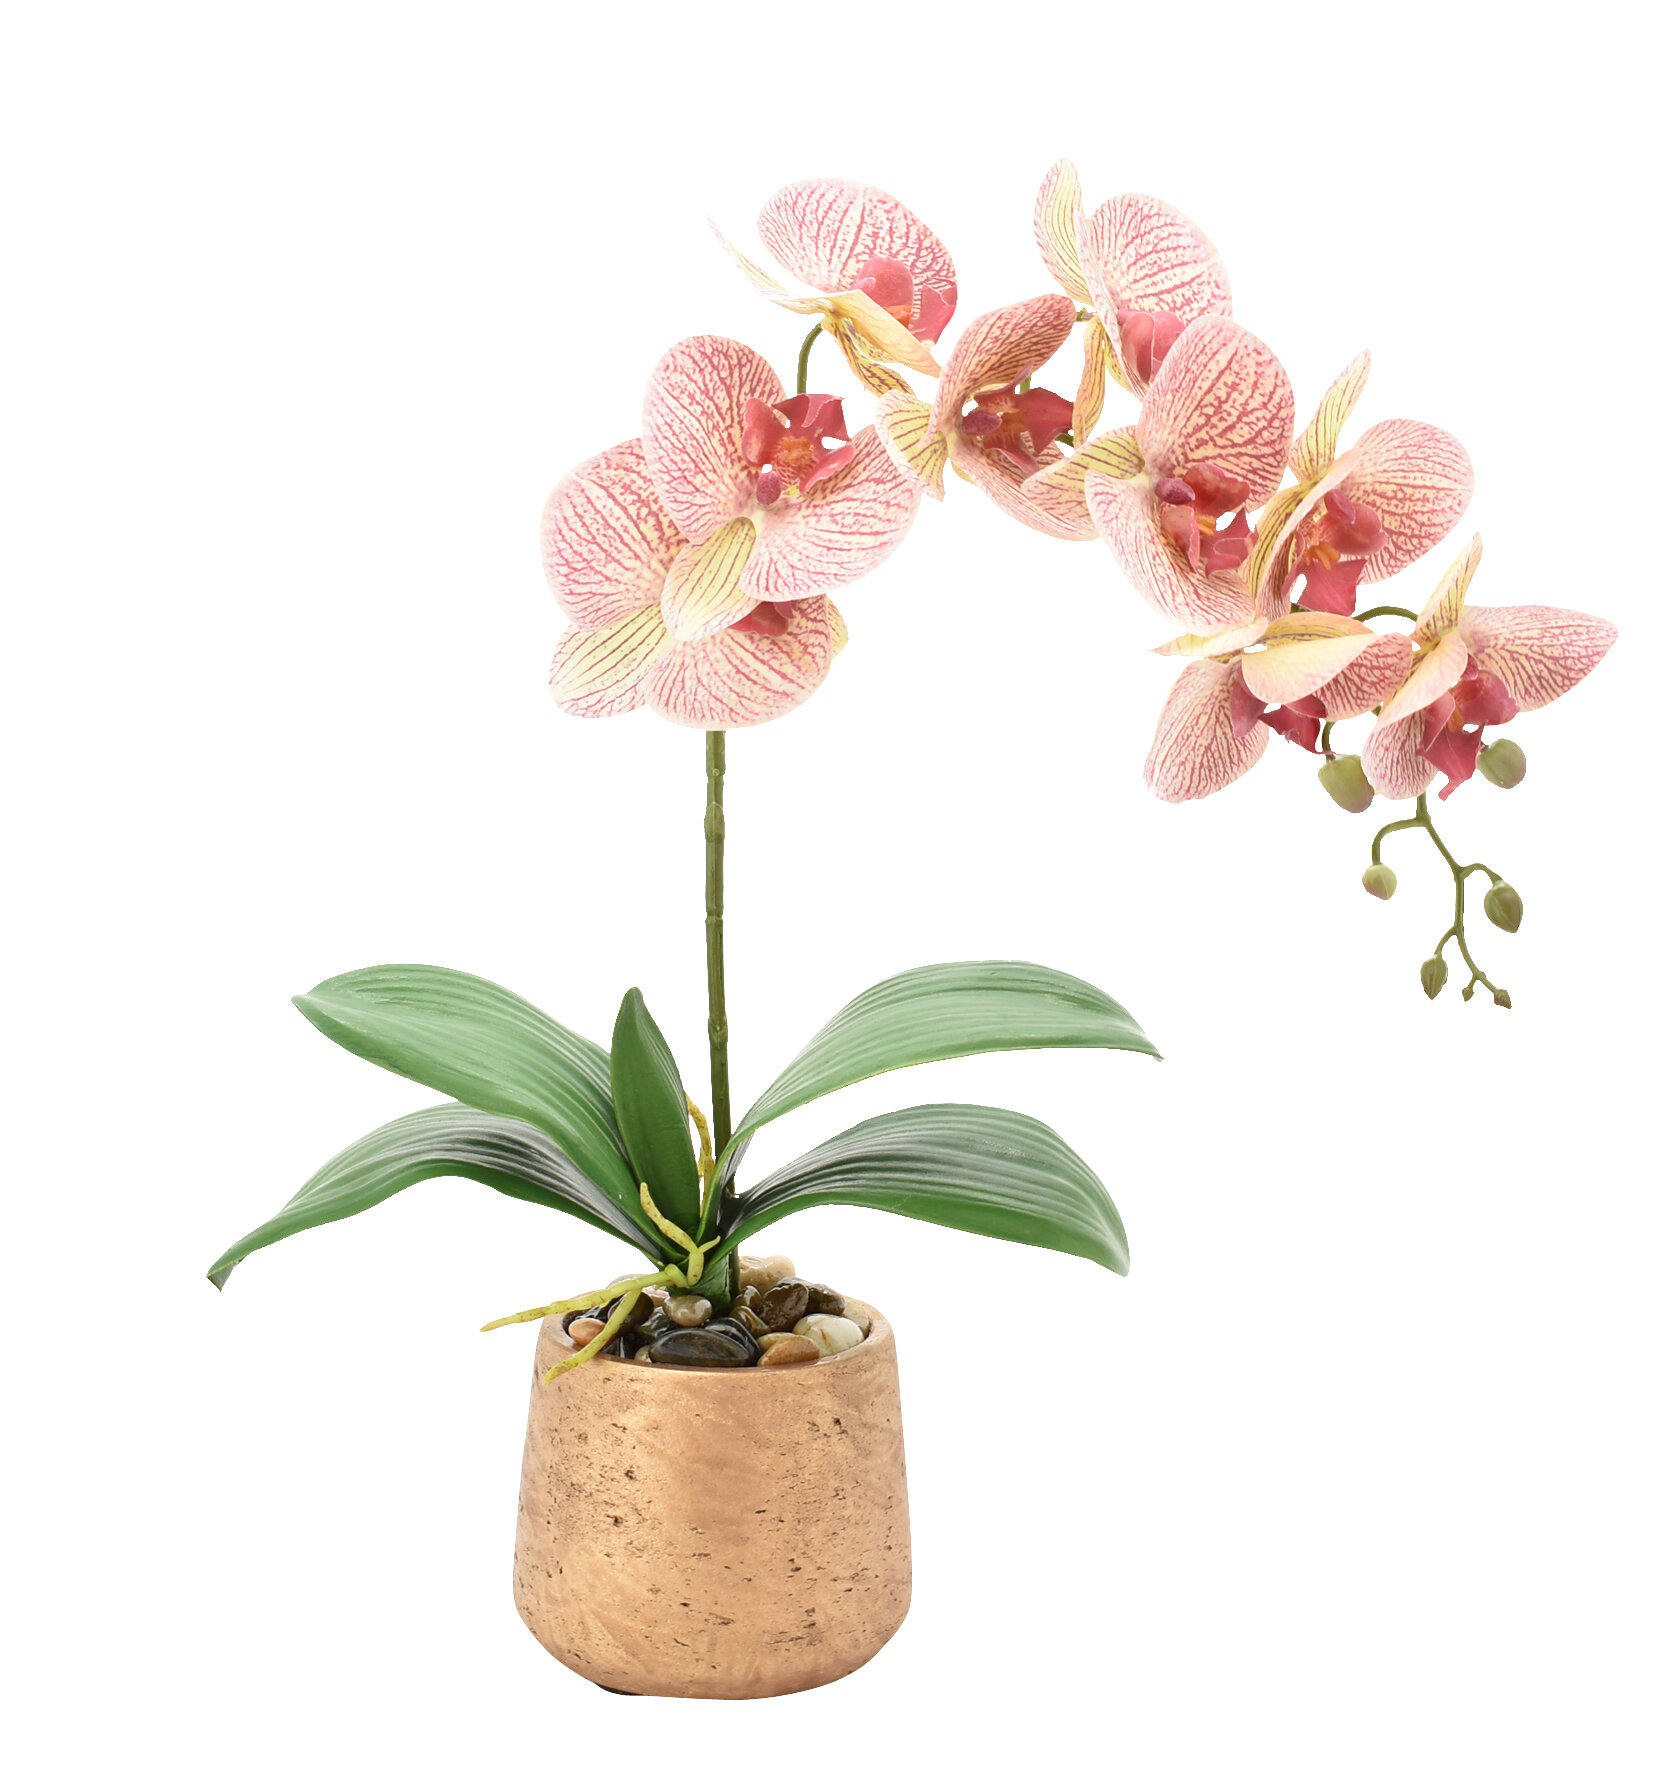 Bloomsbury Market Phalaenopsis Orchids Floral Arrangement In Pot Reviews Wayfair